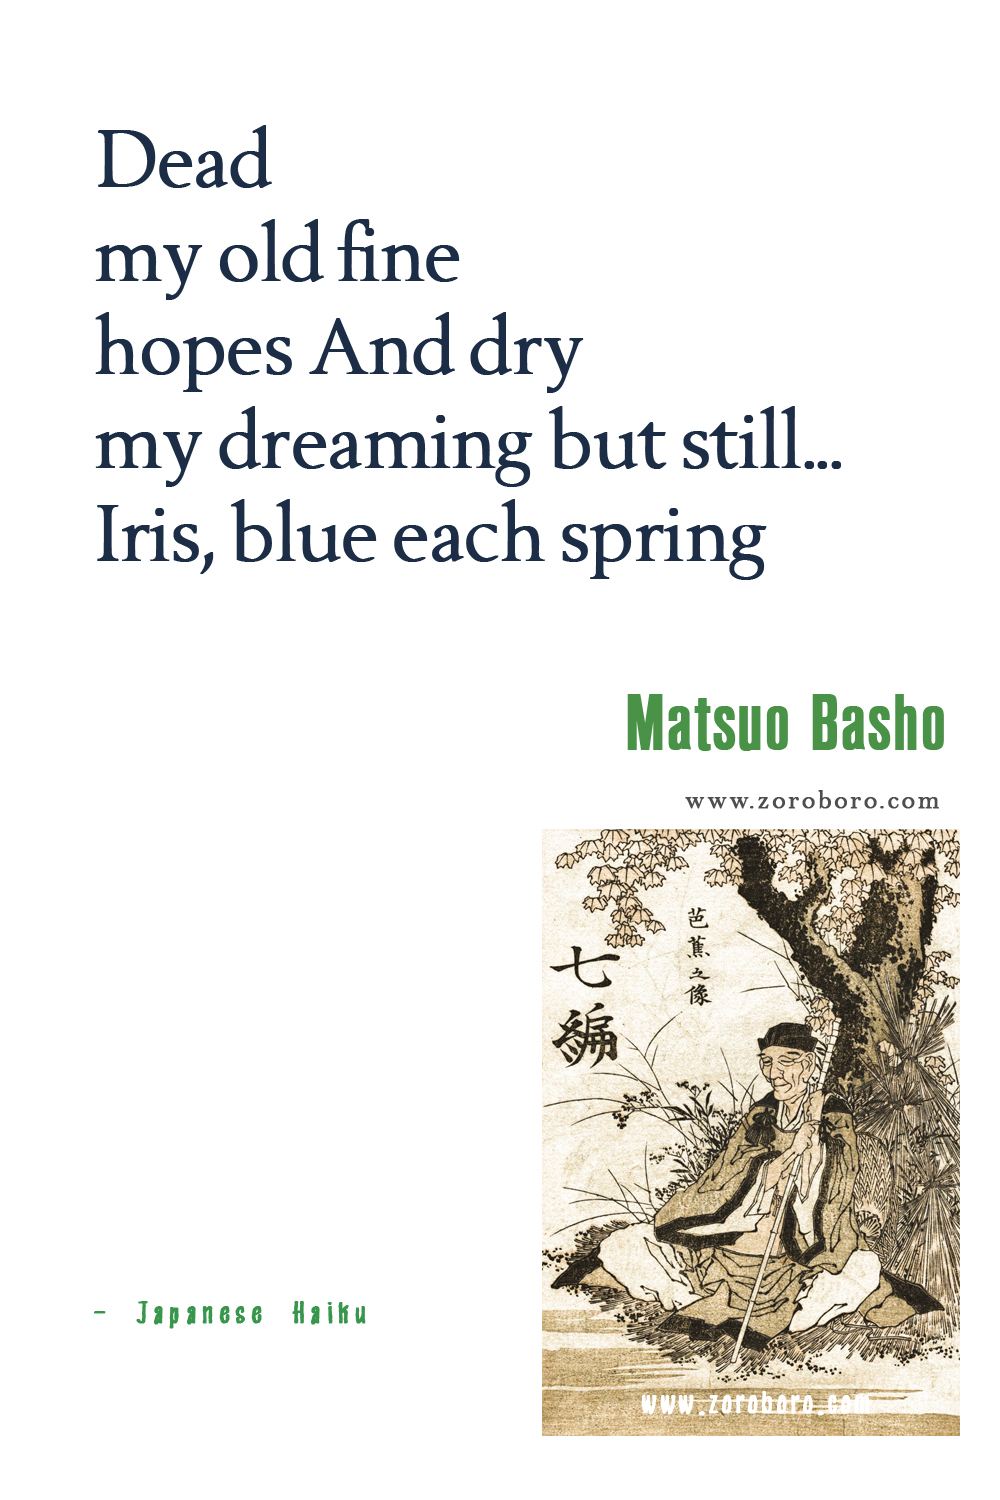 Matsuo Basho Quotes, Matsuo Basho Poems, Matsuo Basho Poet, Matsuo Basho Japanese Haiku Poetry, Matsuo Basho Quotes